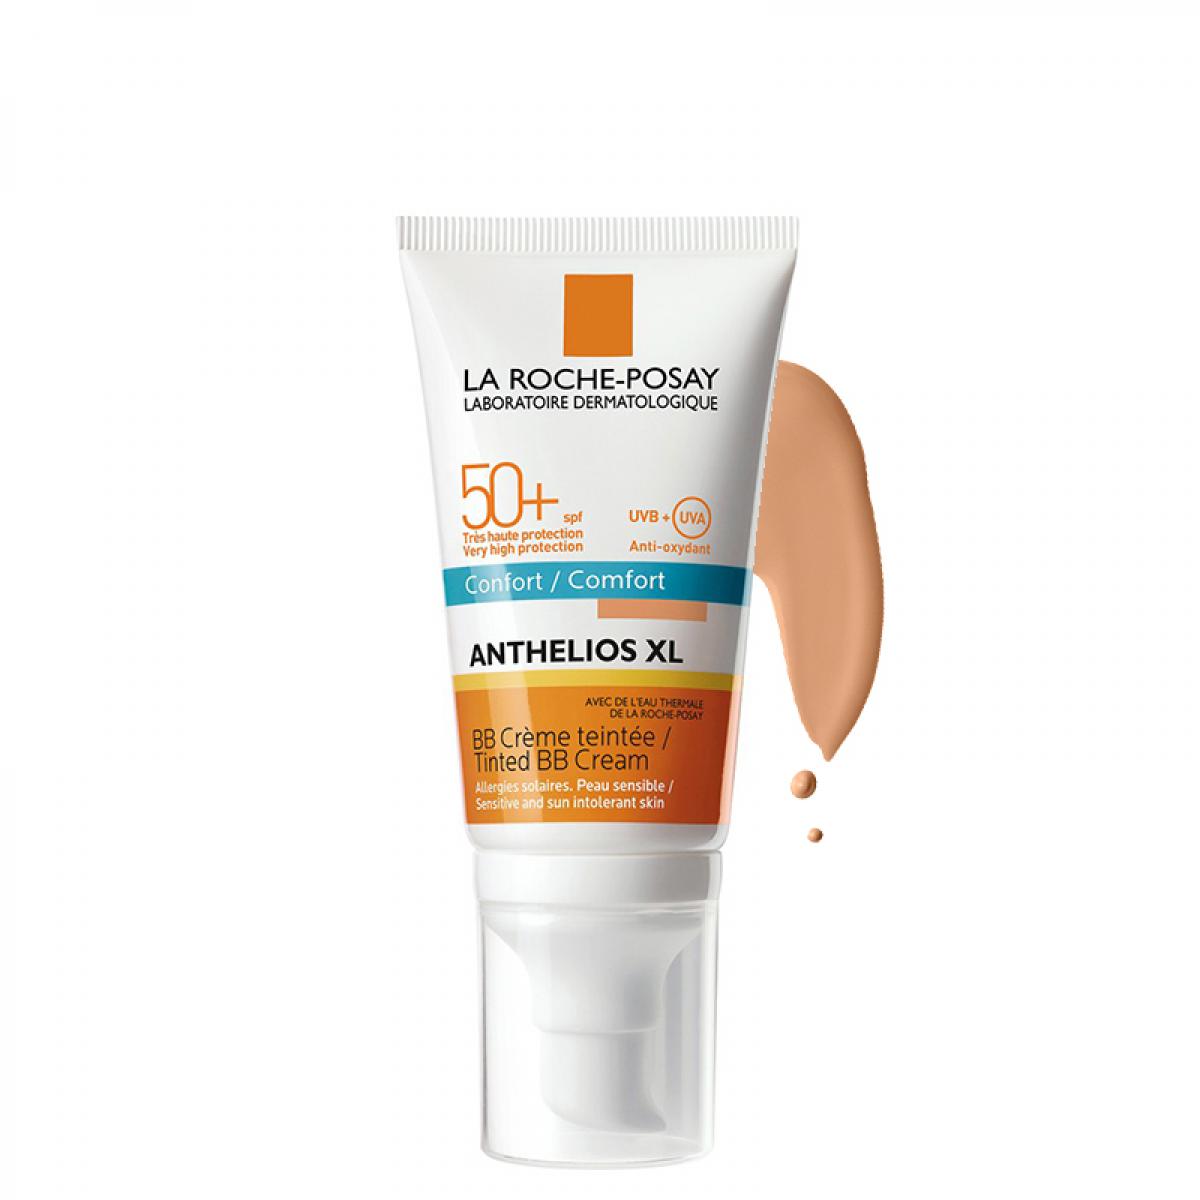 کرم ضد آفتاب رنگی با +SPF 50 حجم 50 میل - Anthelios XL Comfort Sunscreen Cream SPF 50+ 50ml Tinted